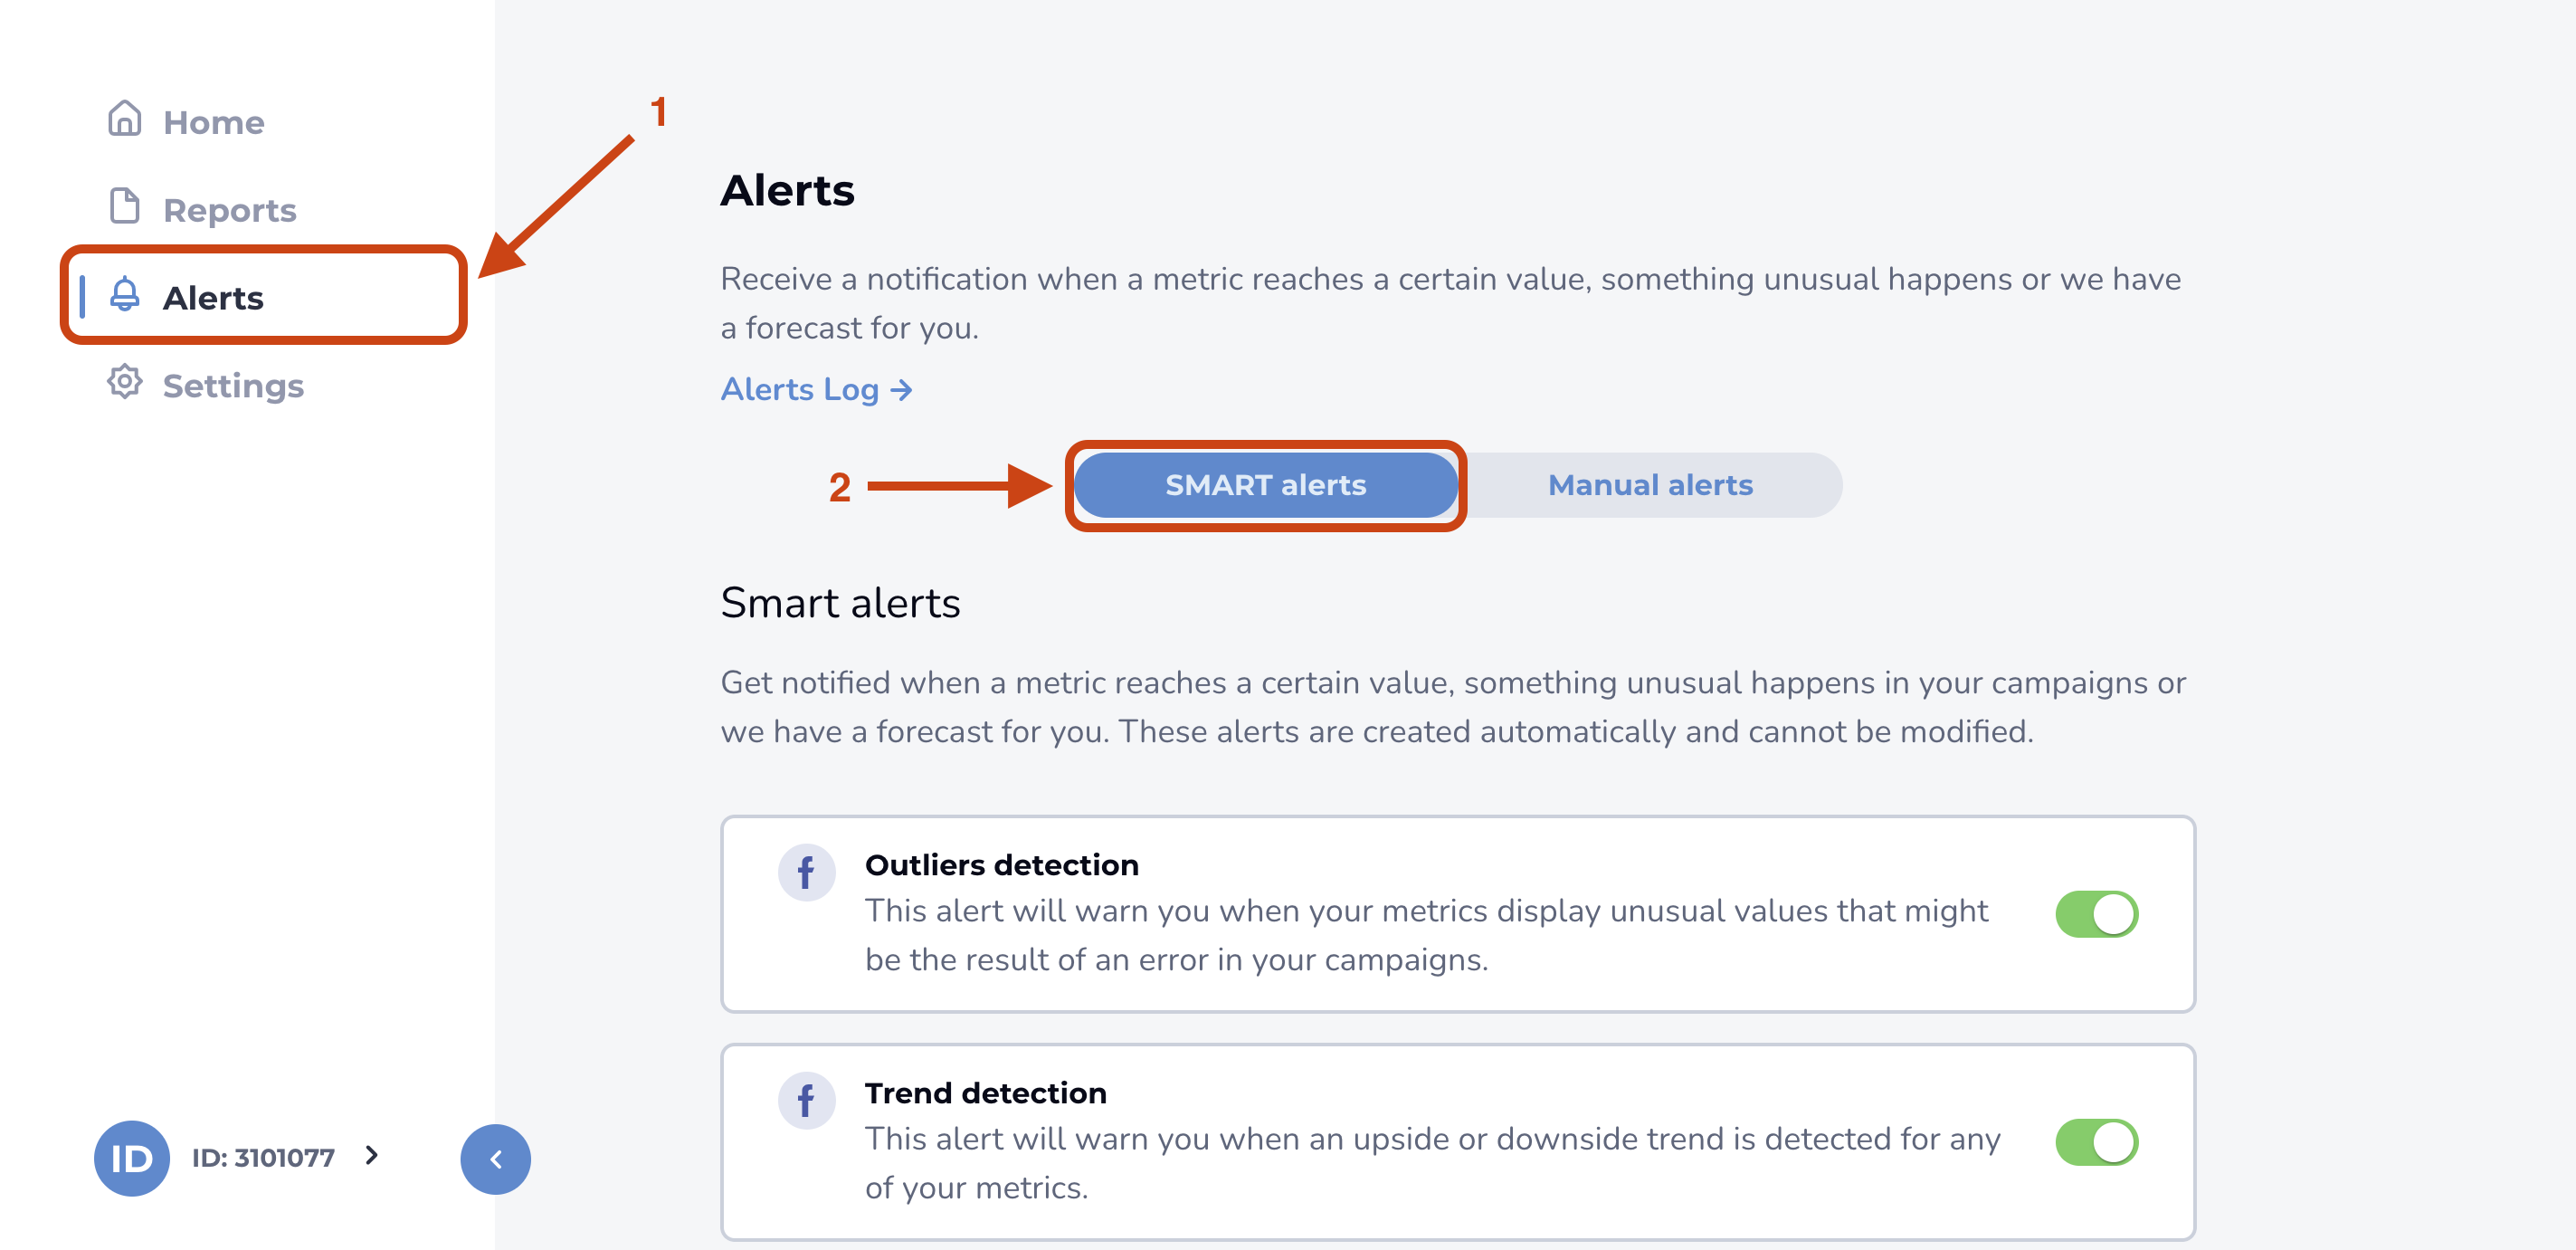 Choosing the Smart alert option in the Alerts tab.